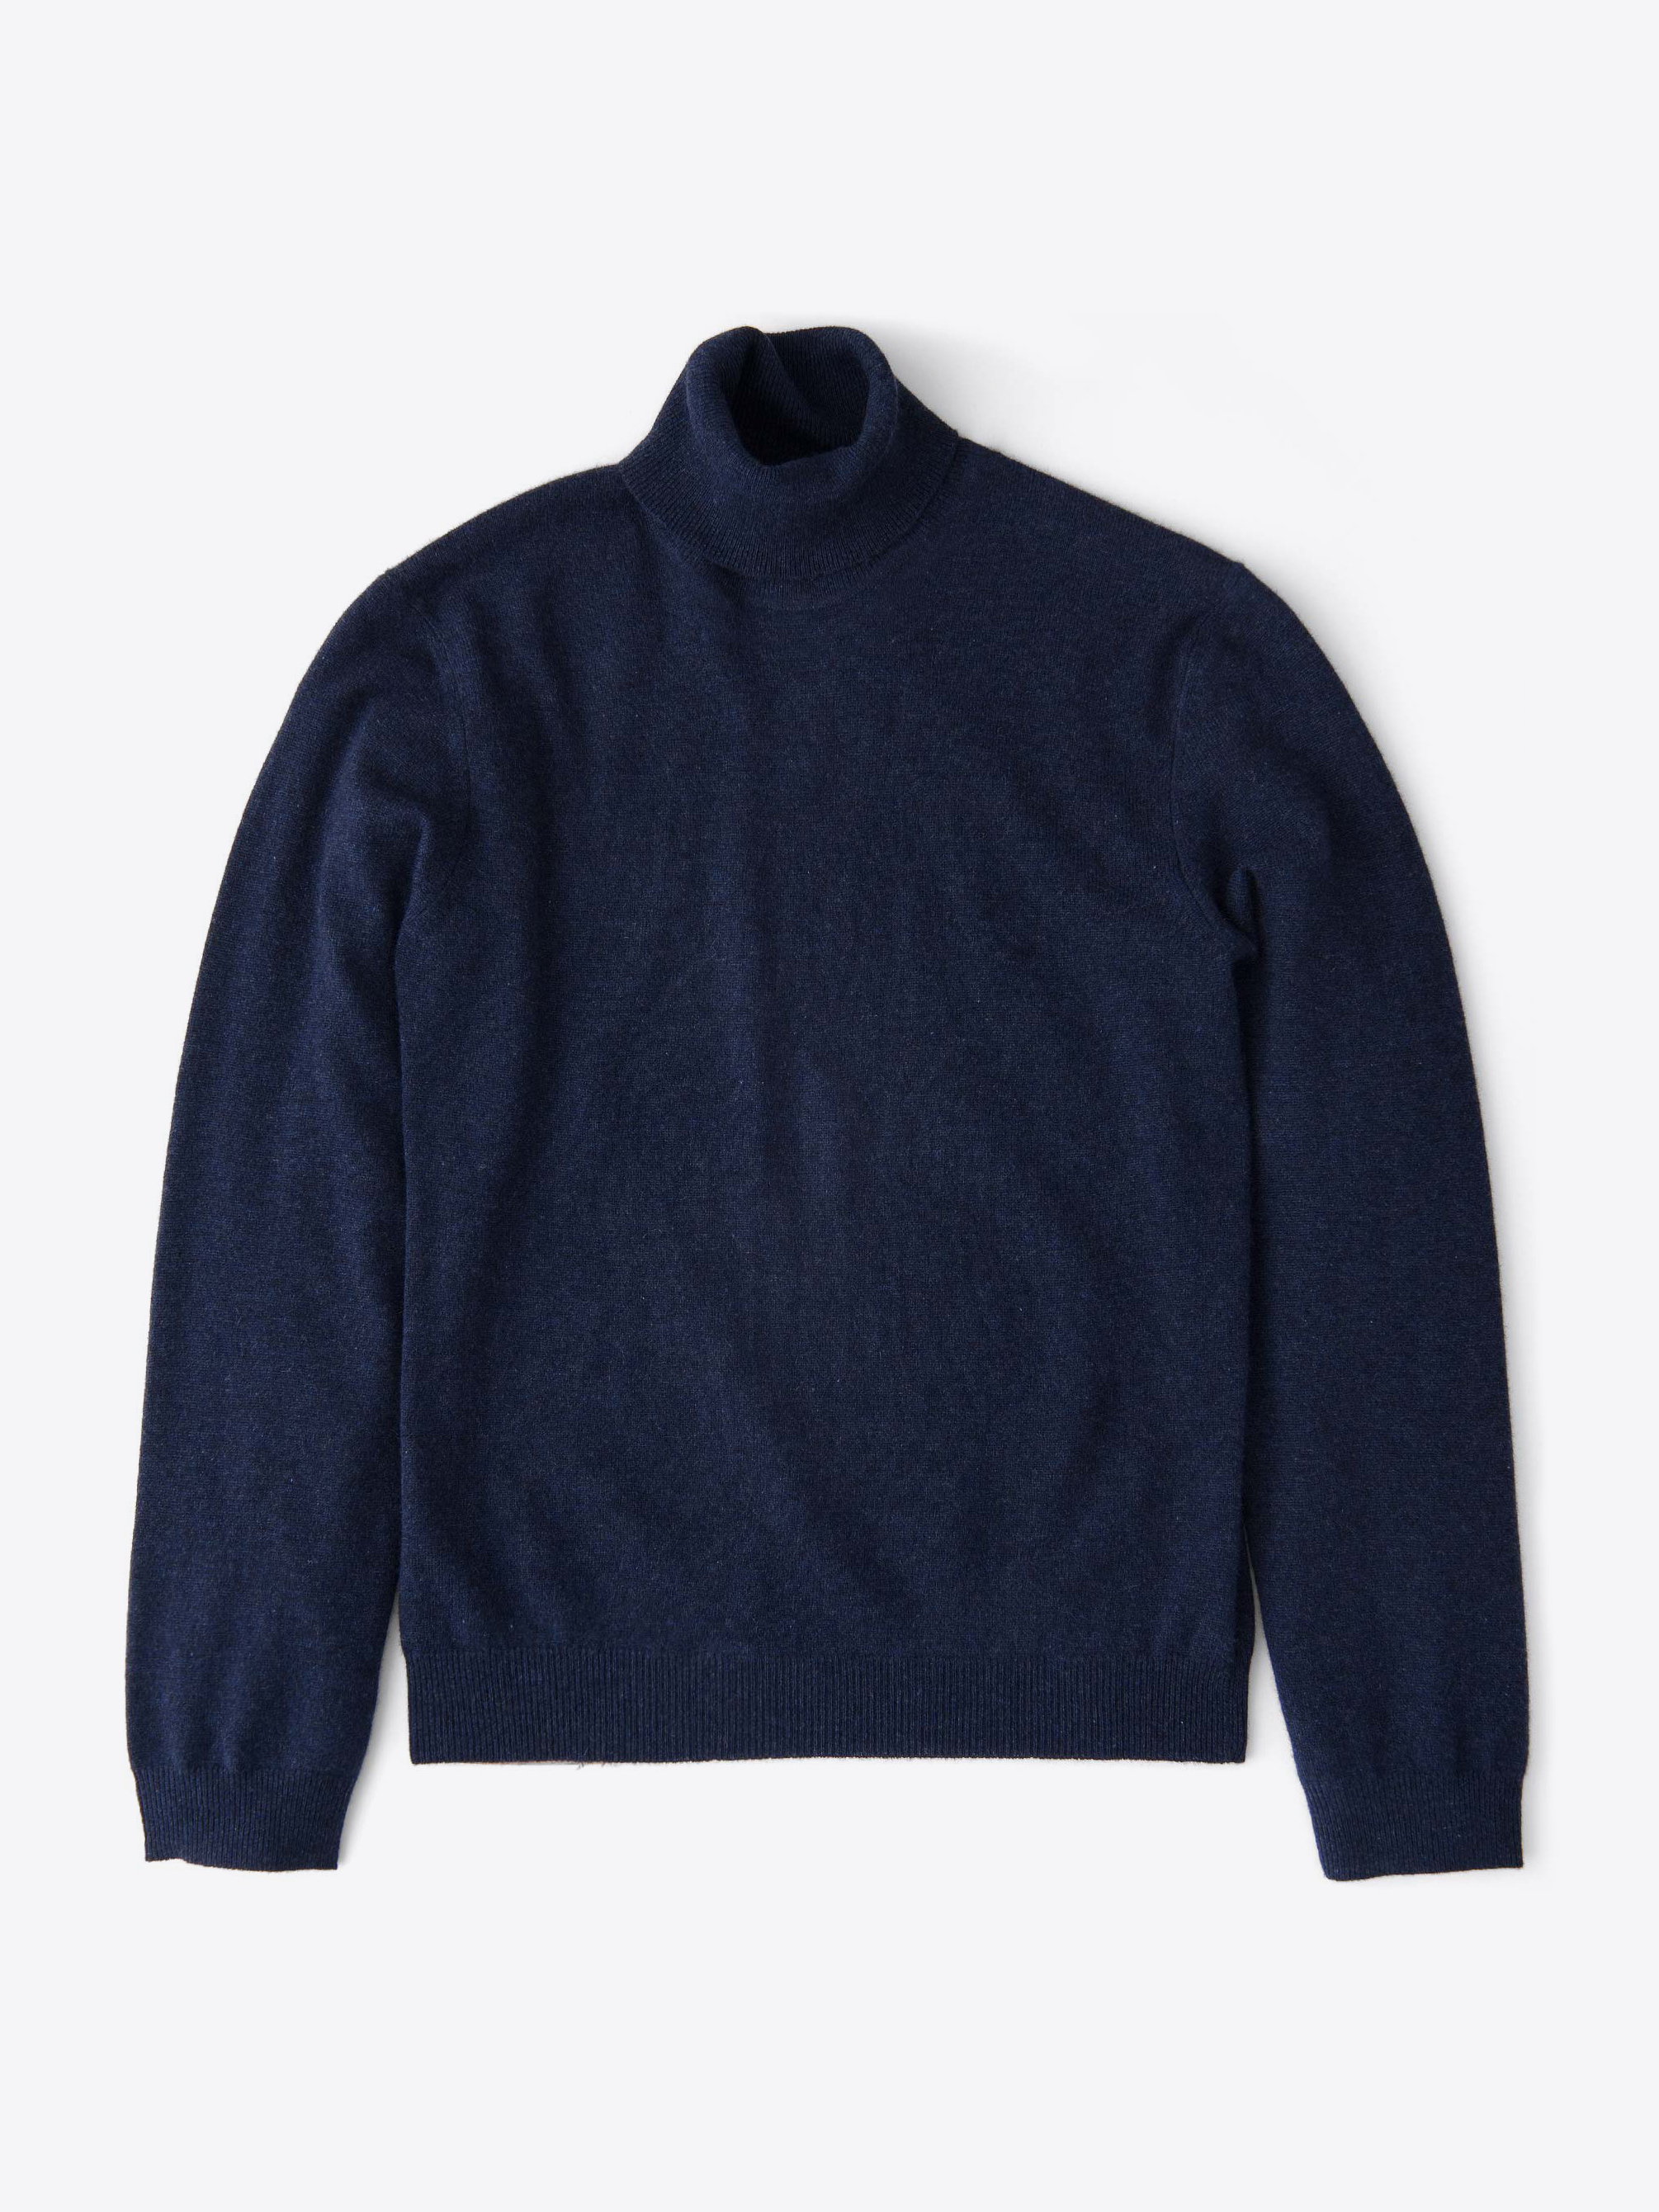 Zoom Image of Navy Melange Cashmere Turtleneck Sweater